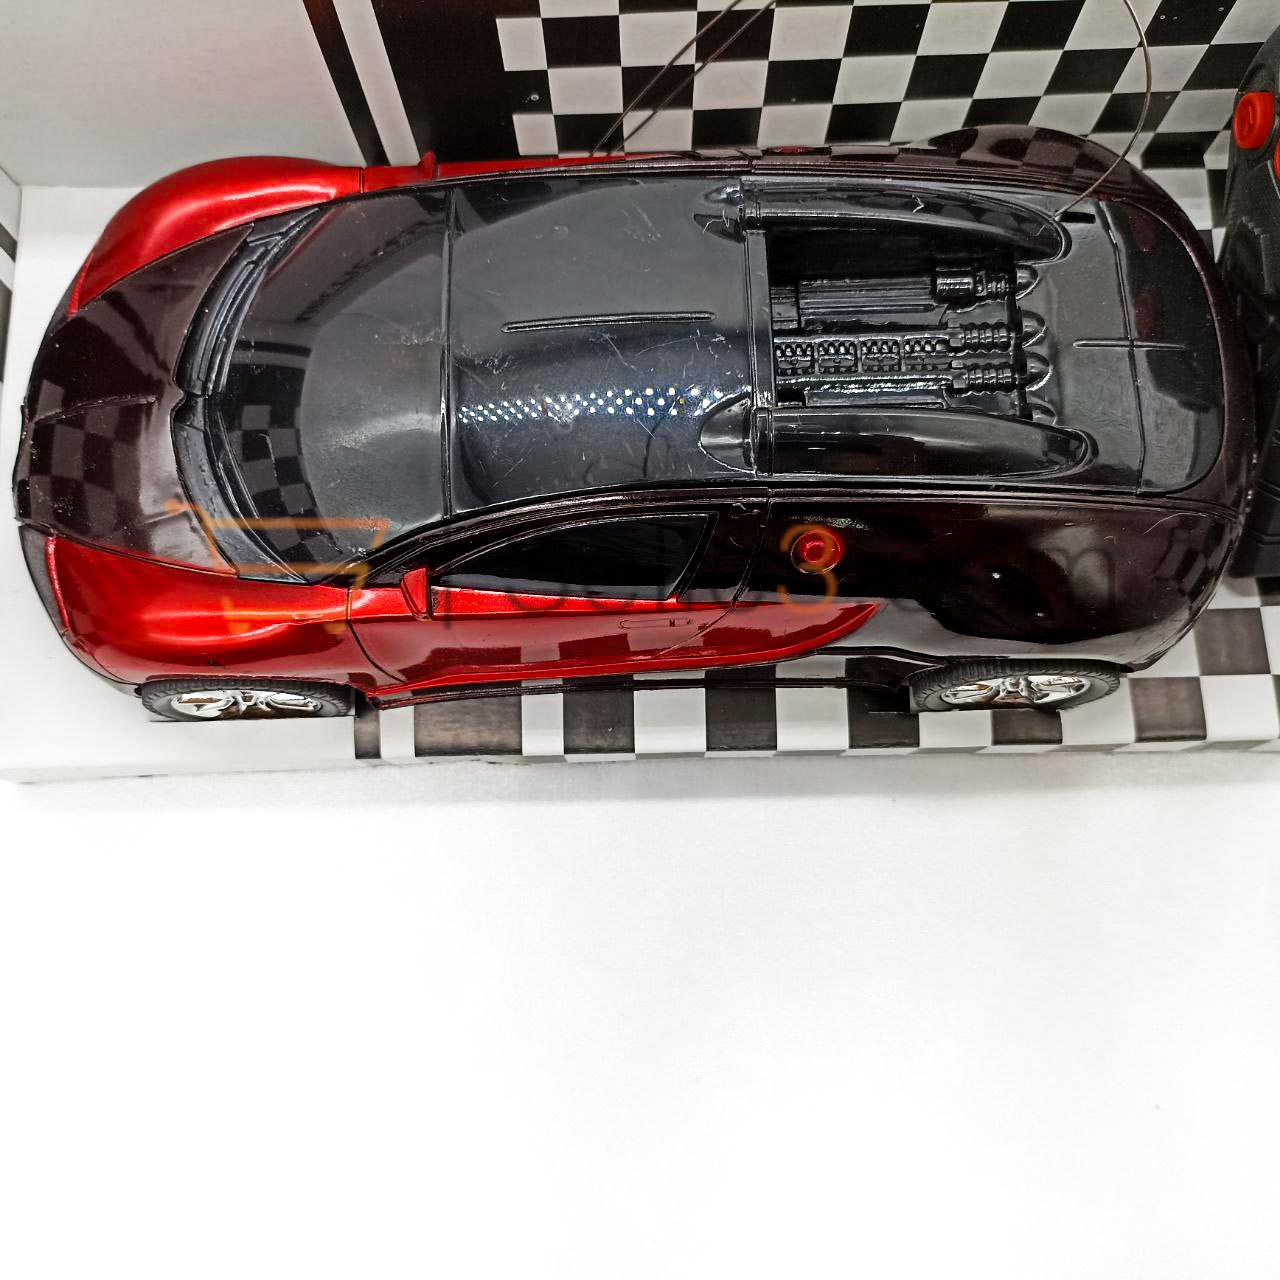 سيارة بوغاتي لاسلكية Bugatti Sansfil Miniature Model Wireless Car Toy